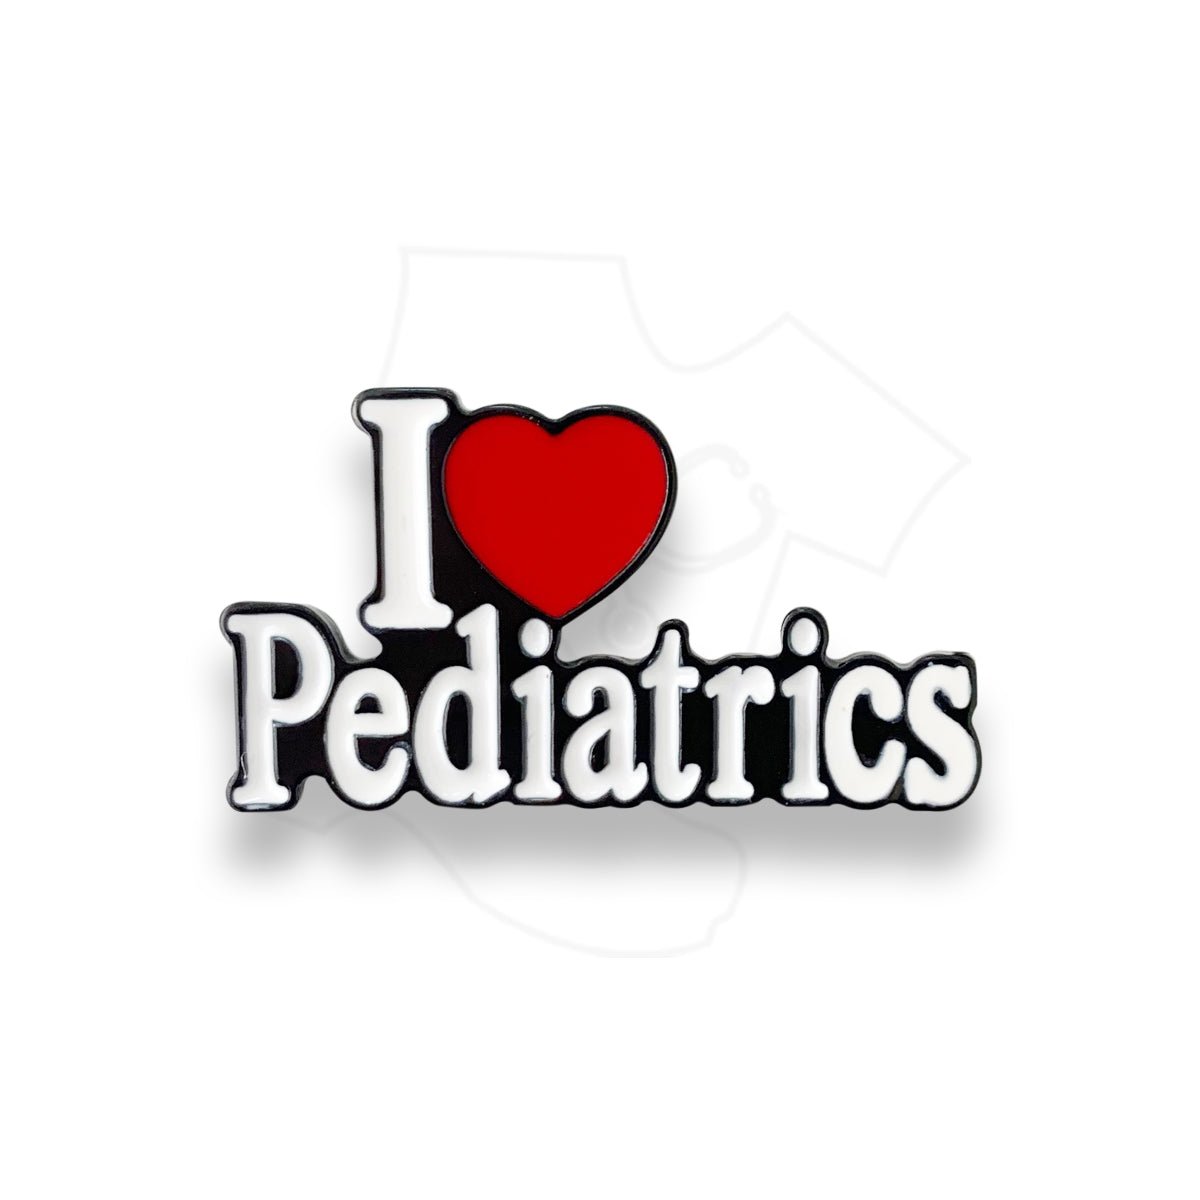 I Love Pediatrics Pin